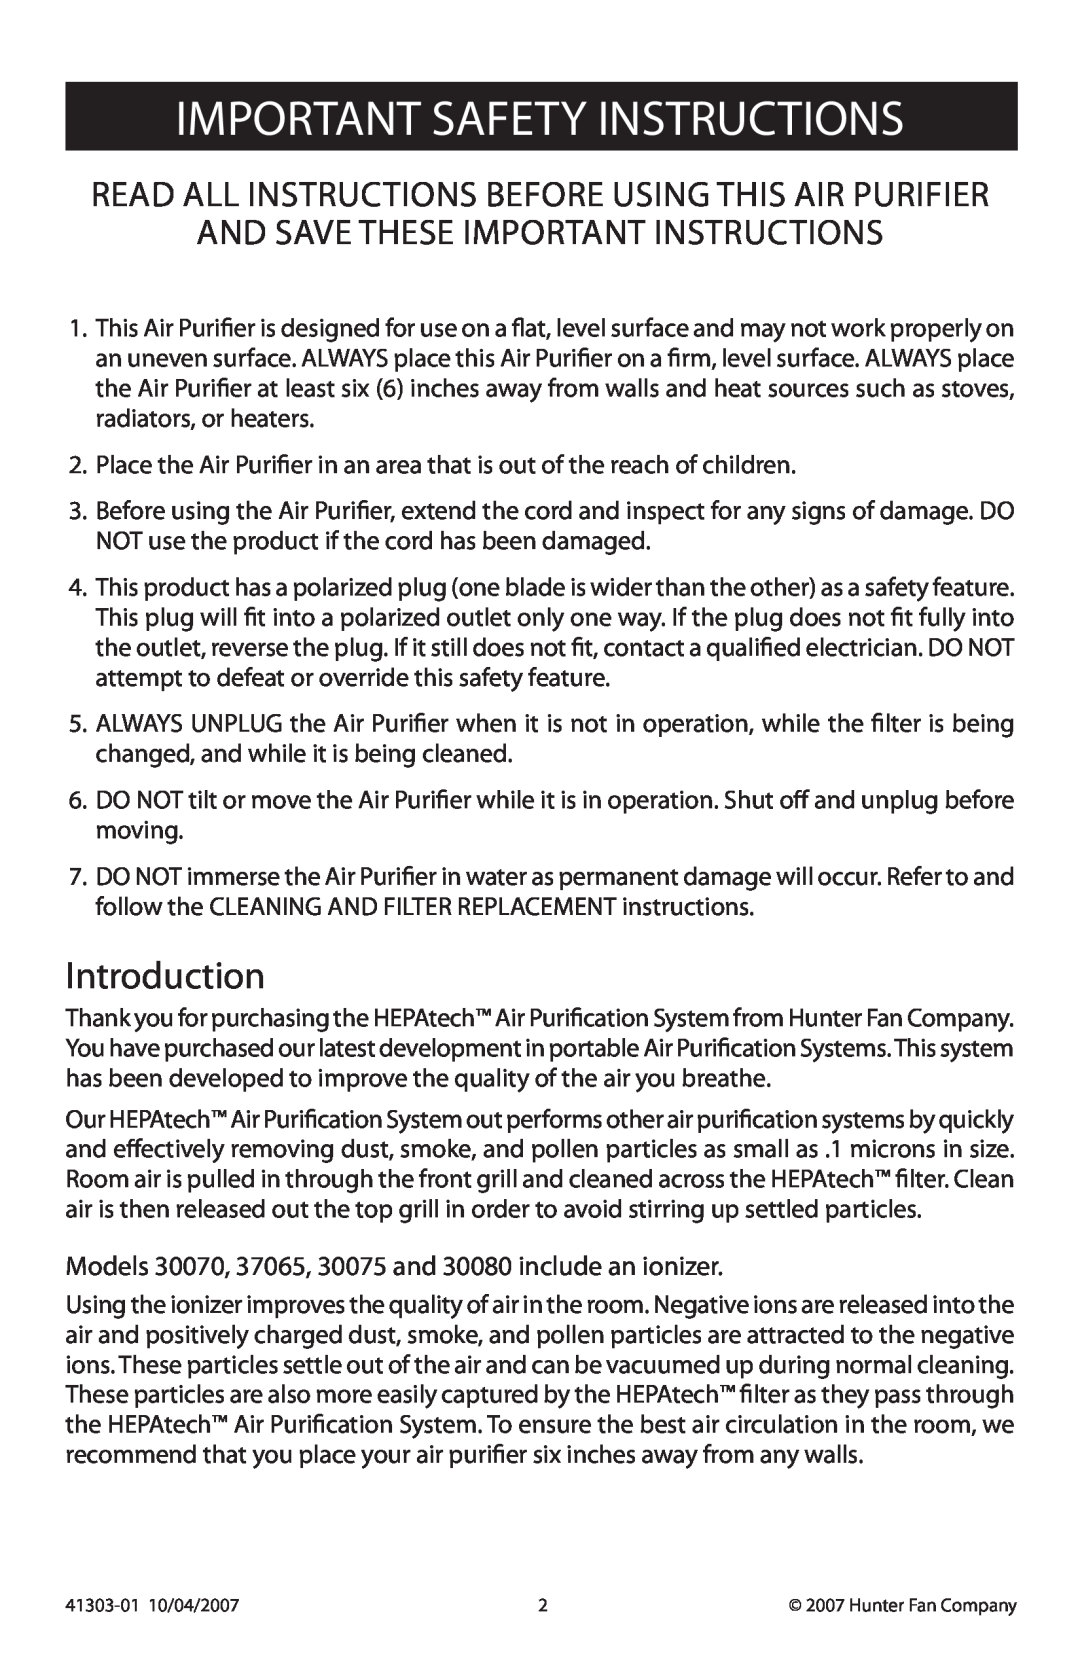 Hunter Fan 30080, 37065, 37055, 30075 Important Safety Instructions, Introduction, and Save These Important Instructions 